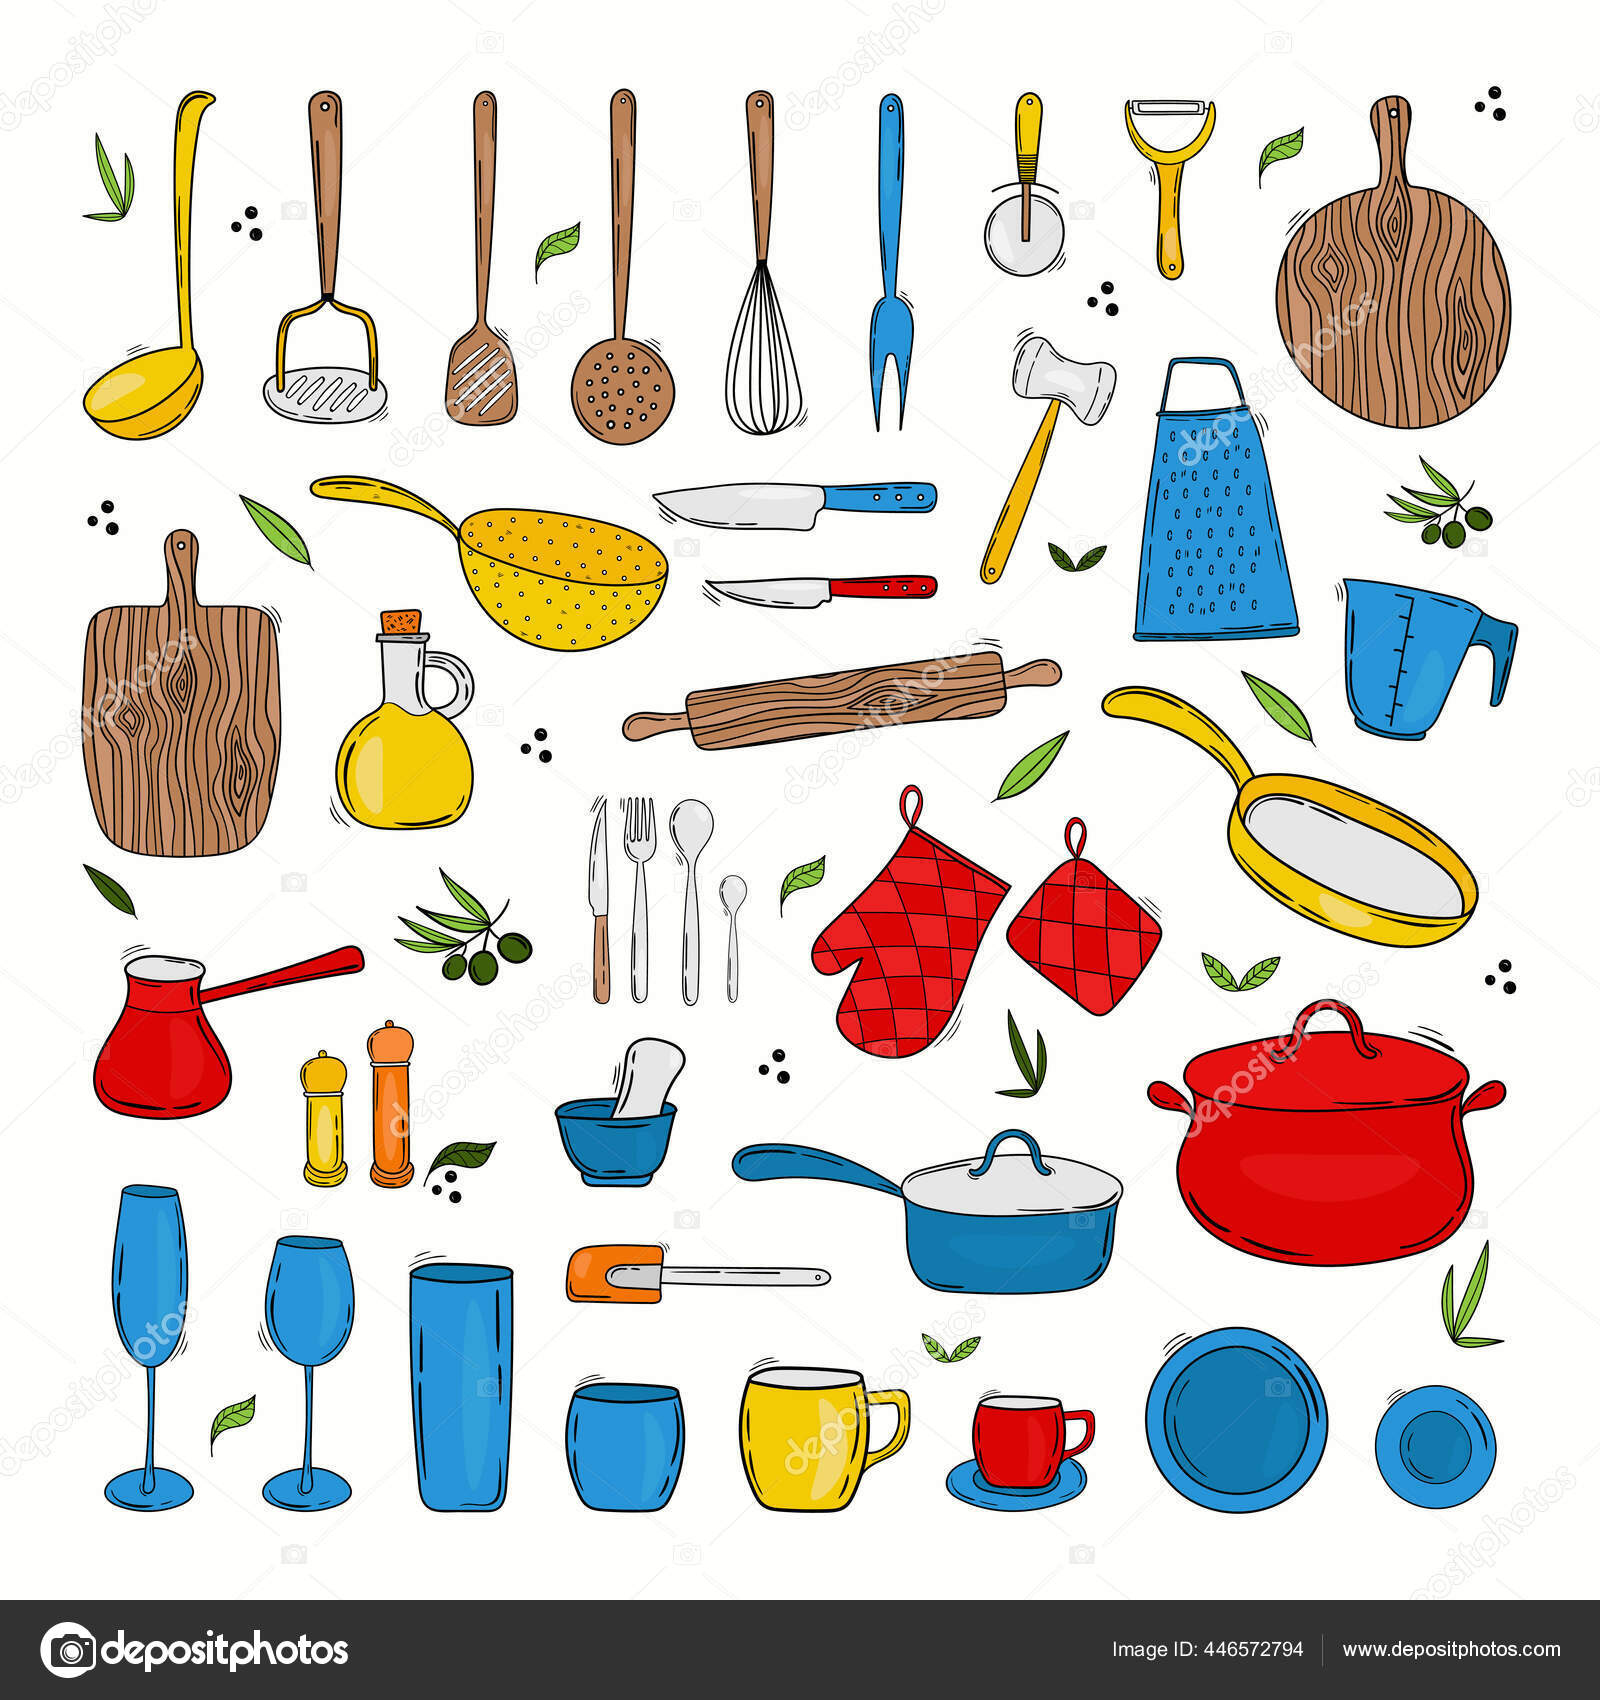 https://st2.depositphotos.com/9507450/44657/v/1600/depositphotos_446572794-stock-illustration-hand-drawn-collection-colorful-kitchen.jpg